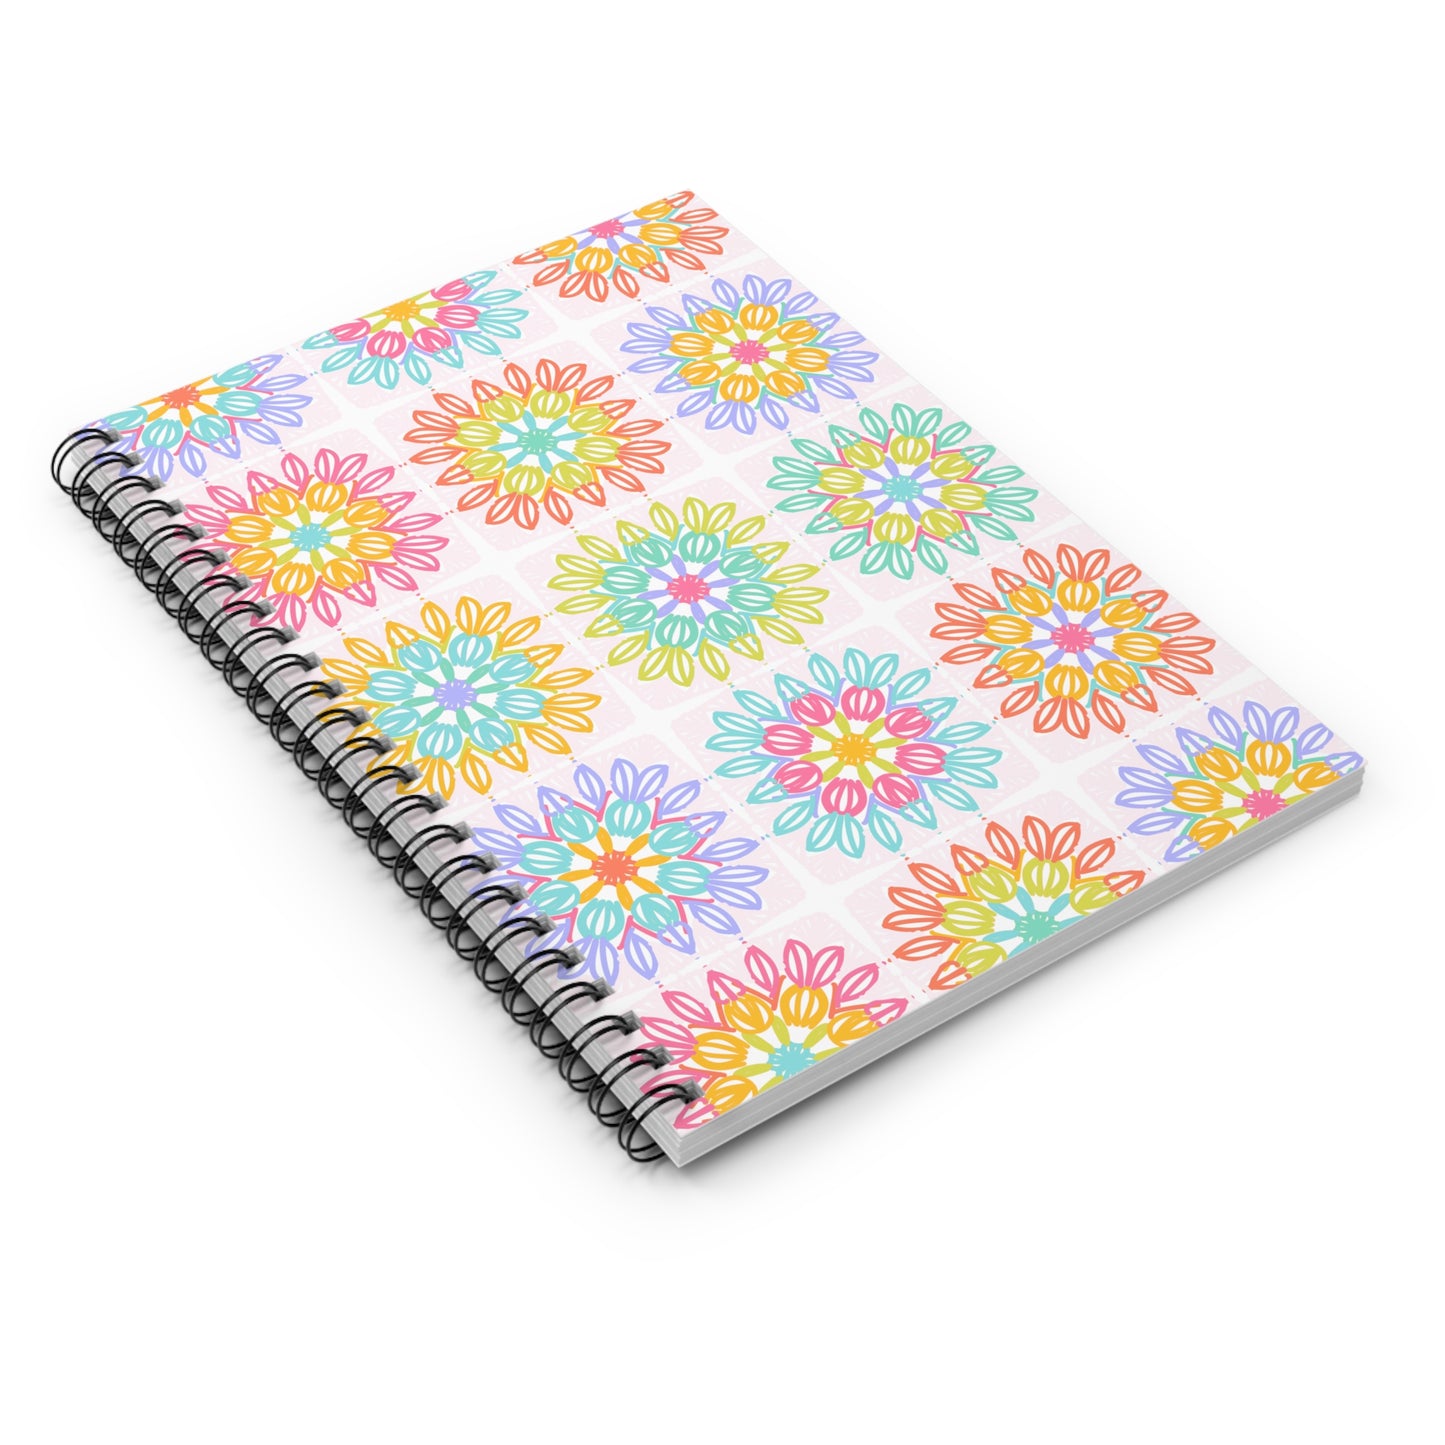 Granny Square in Summer Lovin’ | Spiral Notebook - Ruled Line | Crochet | Yarn | Knit | Craft